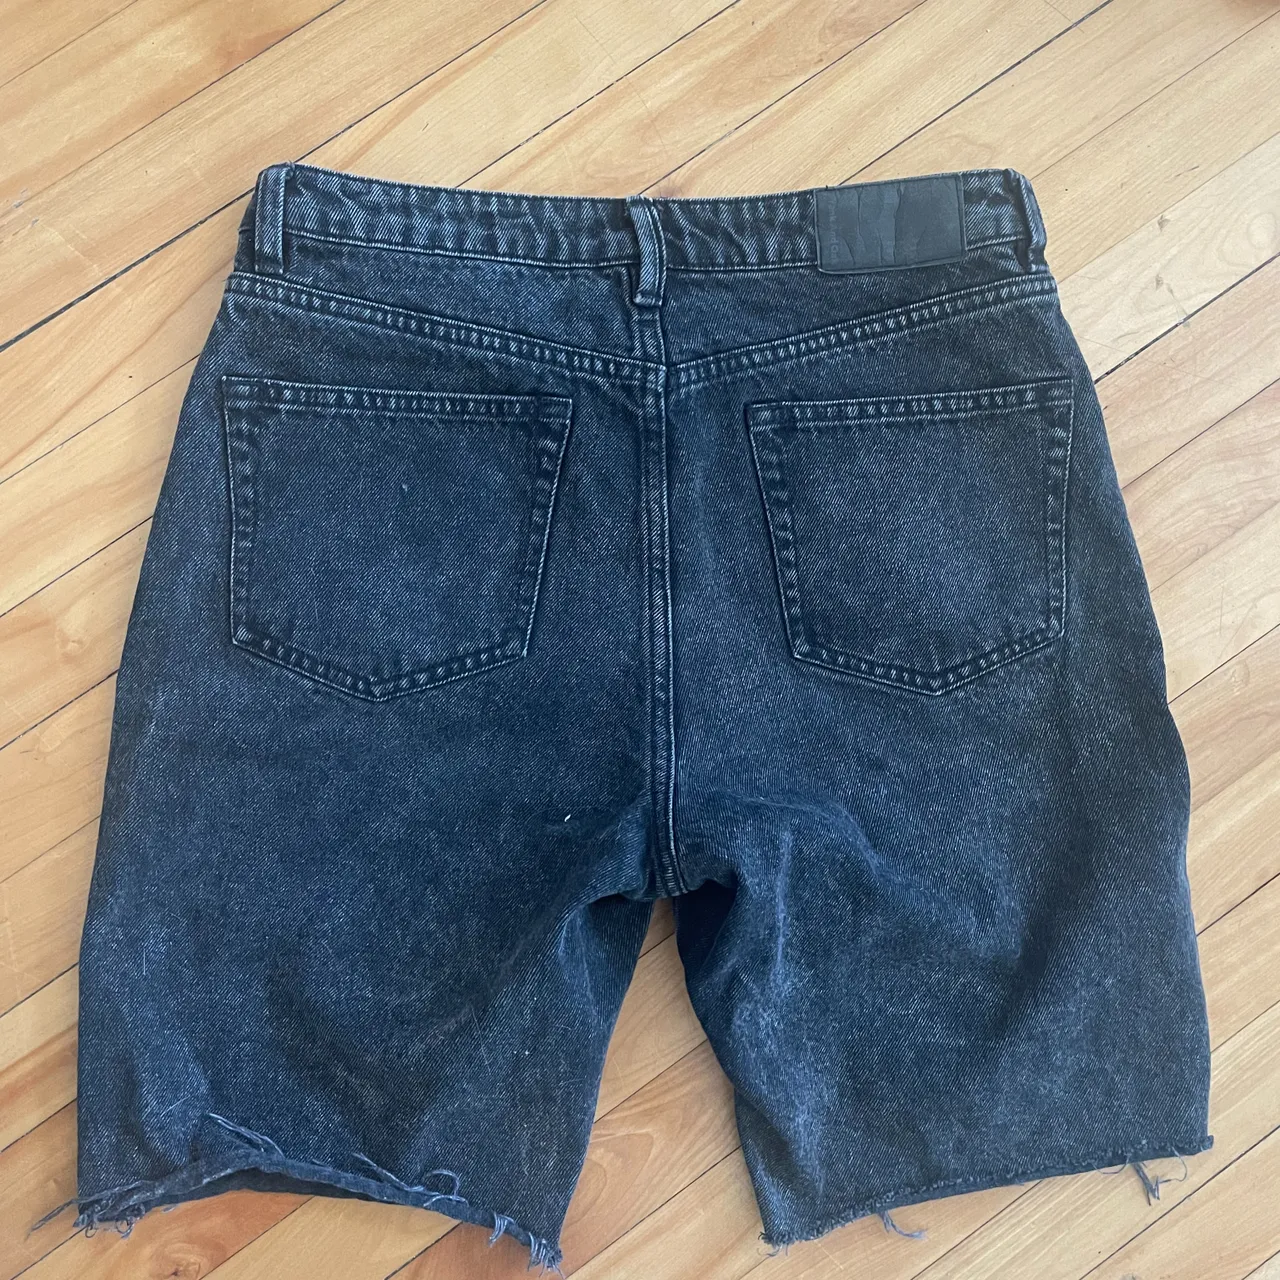 Frank and oak jean shorts photo 1